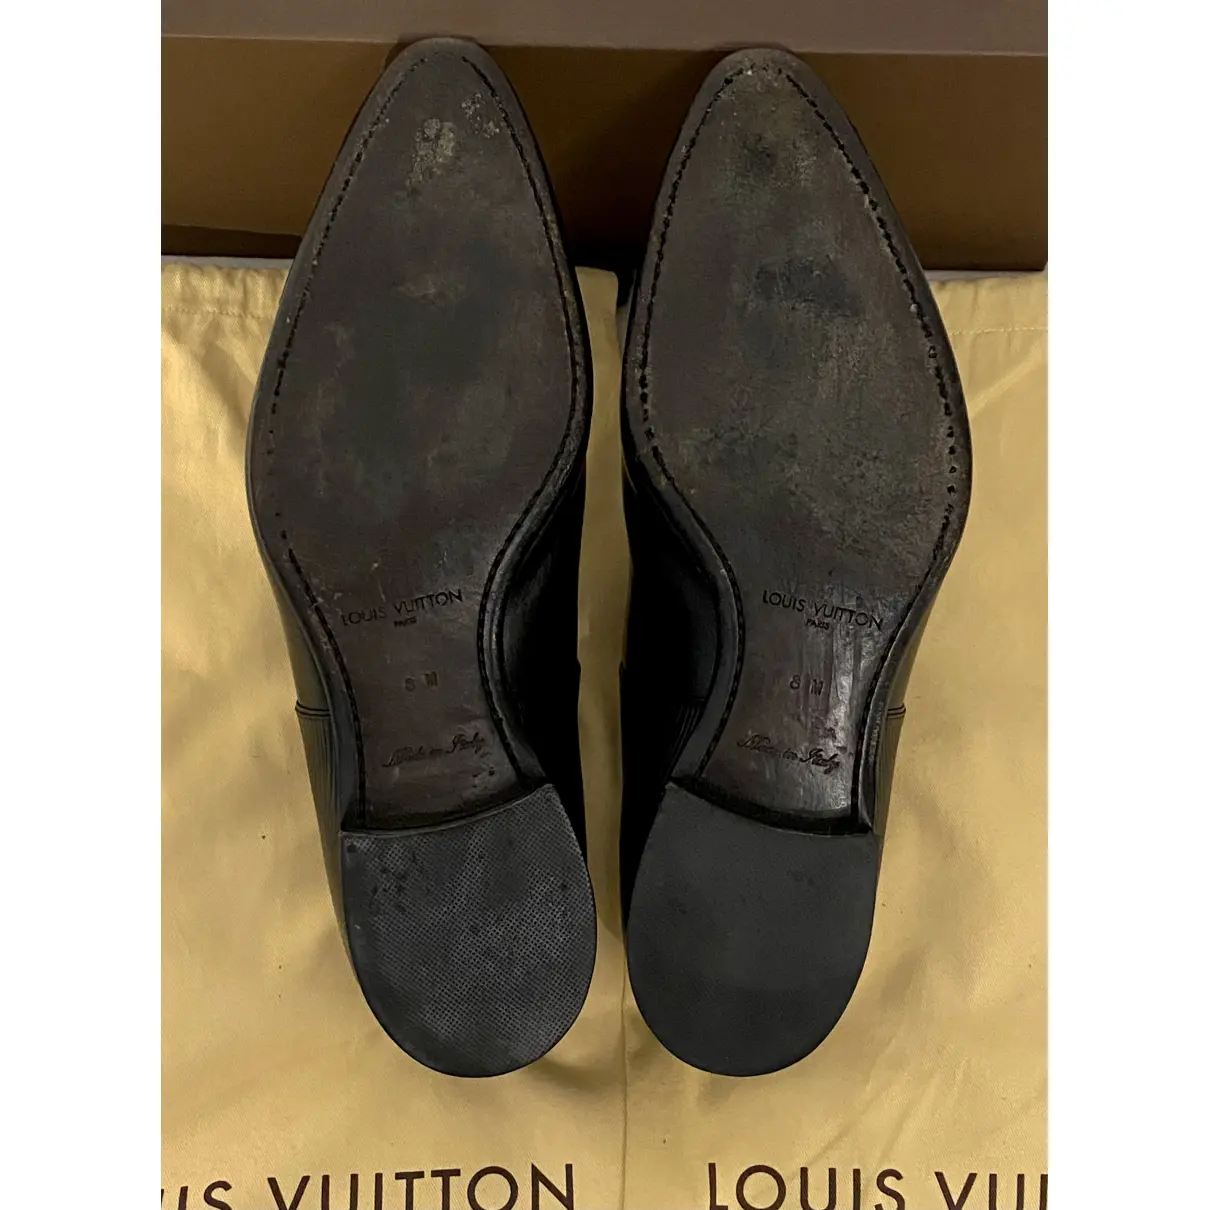 Solférino leather lace ups Louis Vuitton